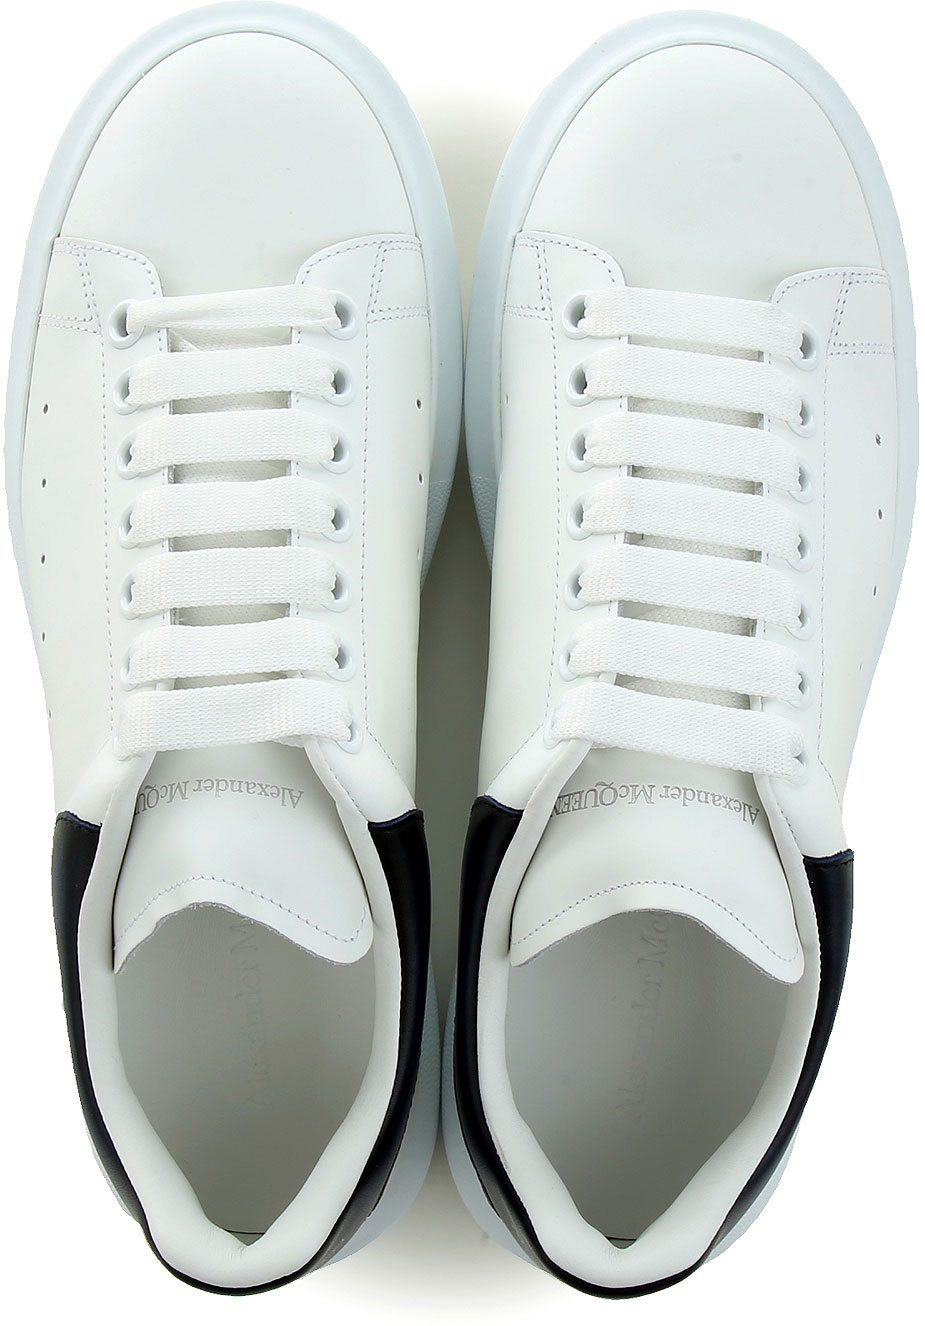 Mens Shoes Alexander McQueen, Style code: 553680-wicgb-9384